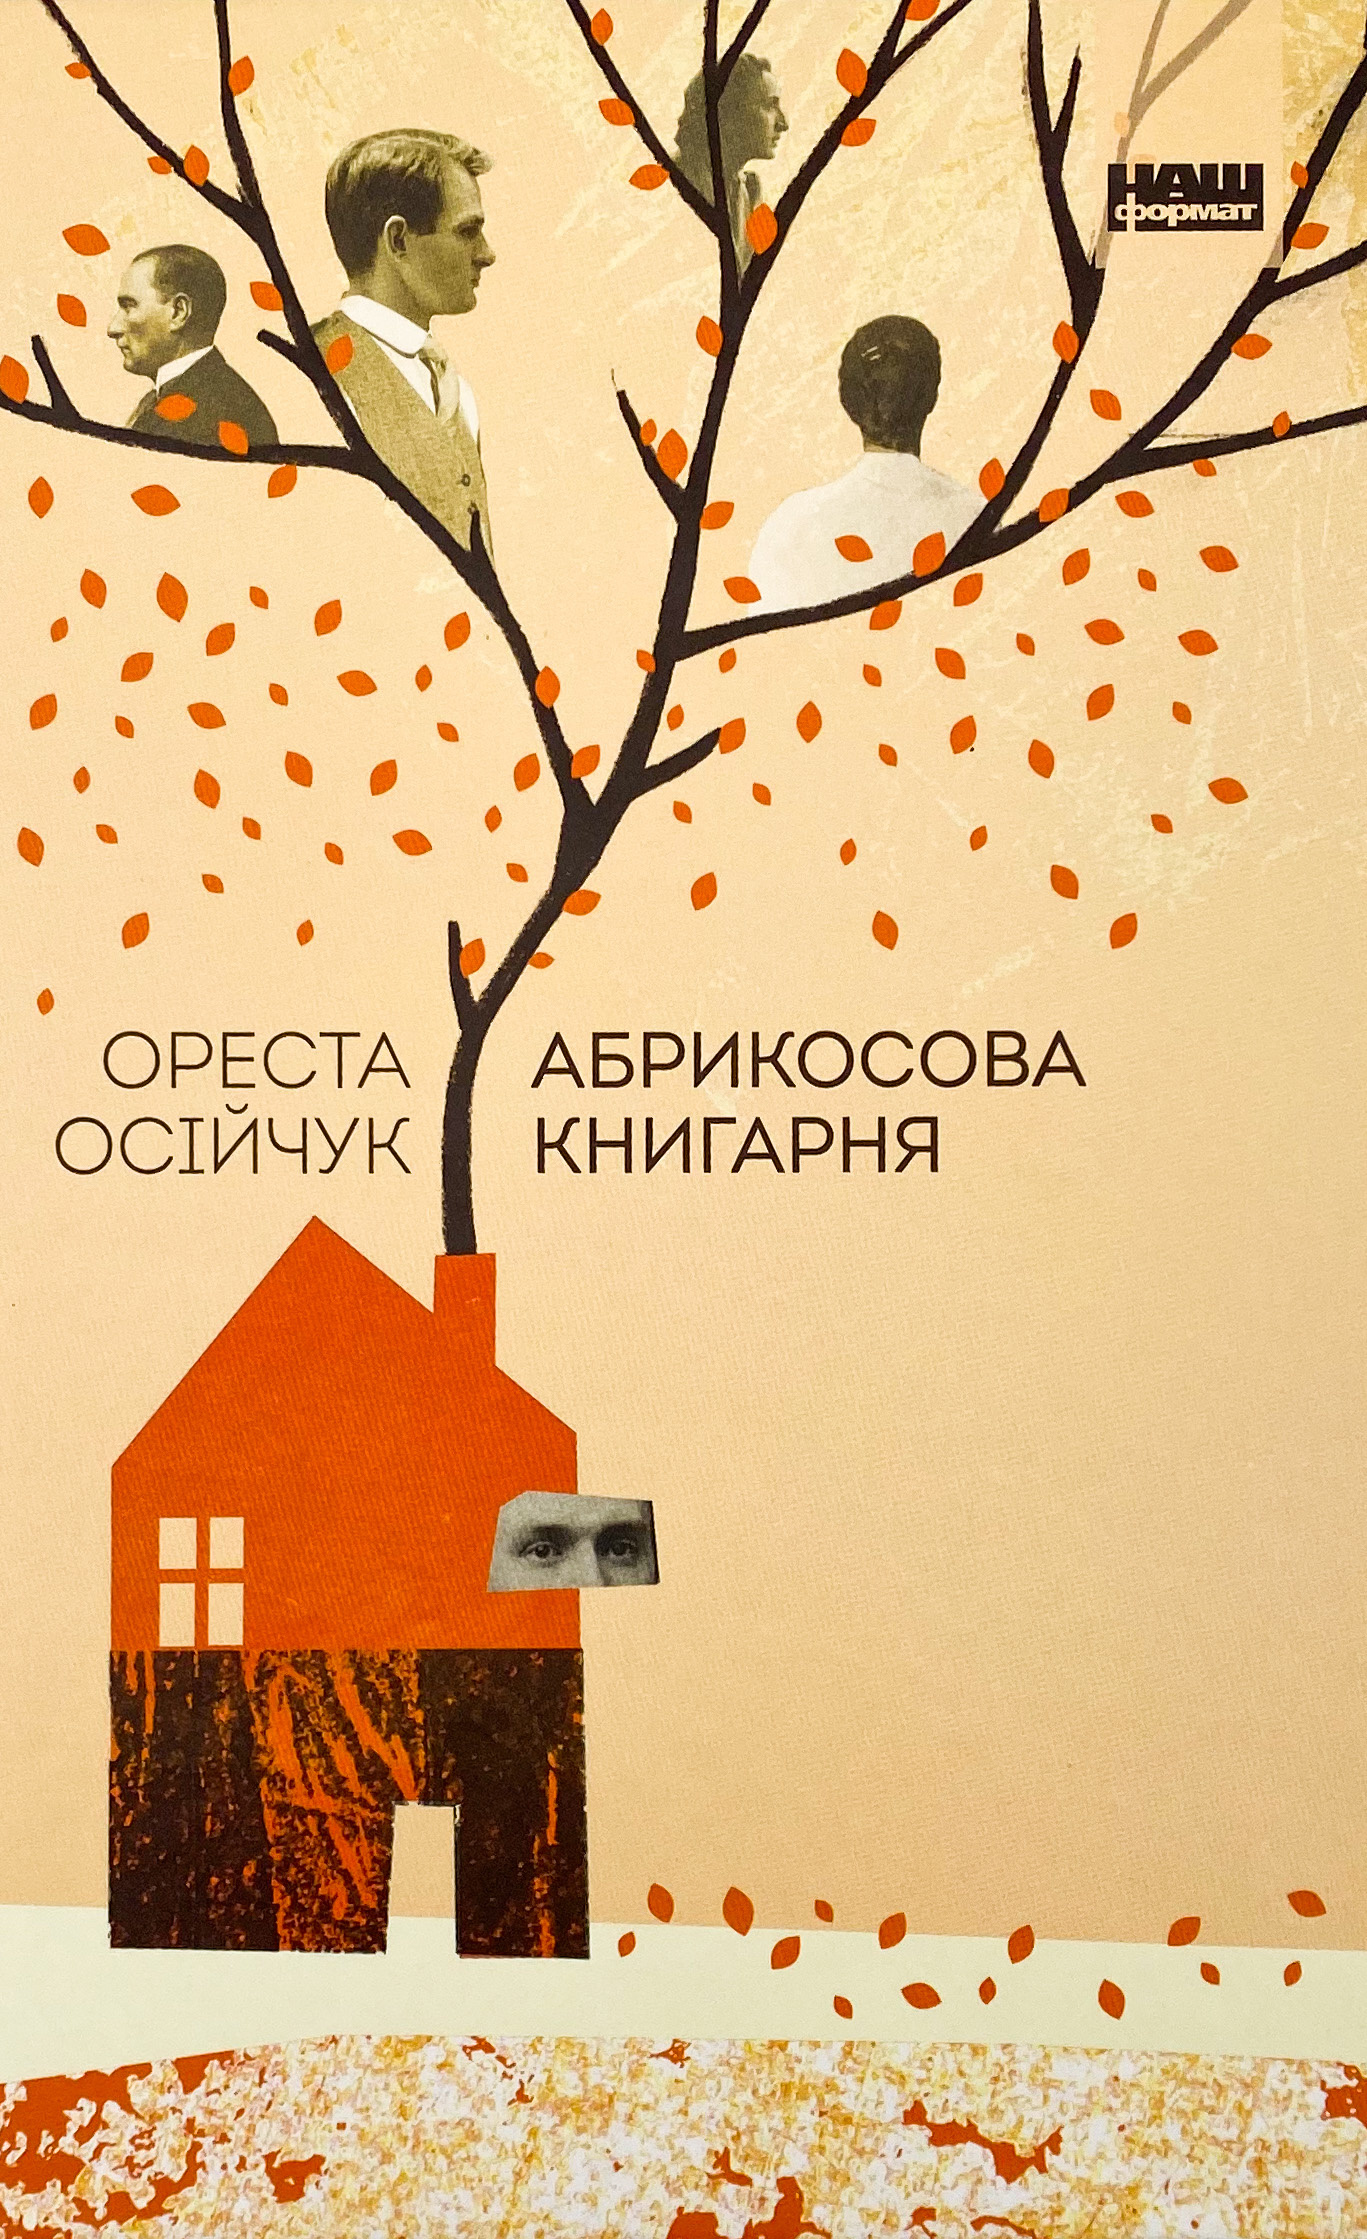 Абрикосова книгарня. Автор — Ореста Осийчук. 